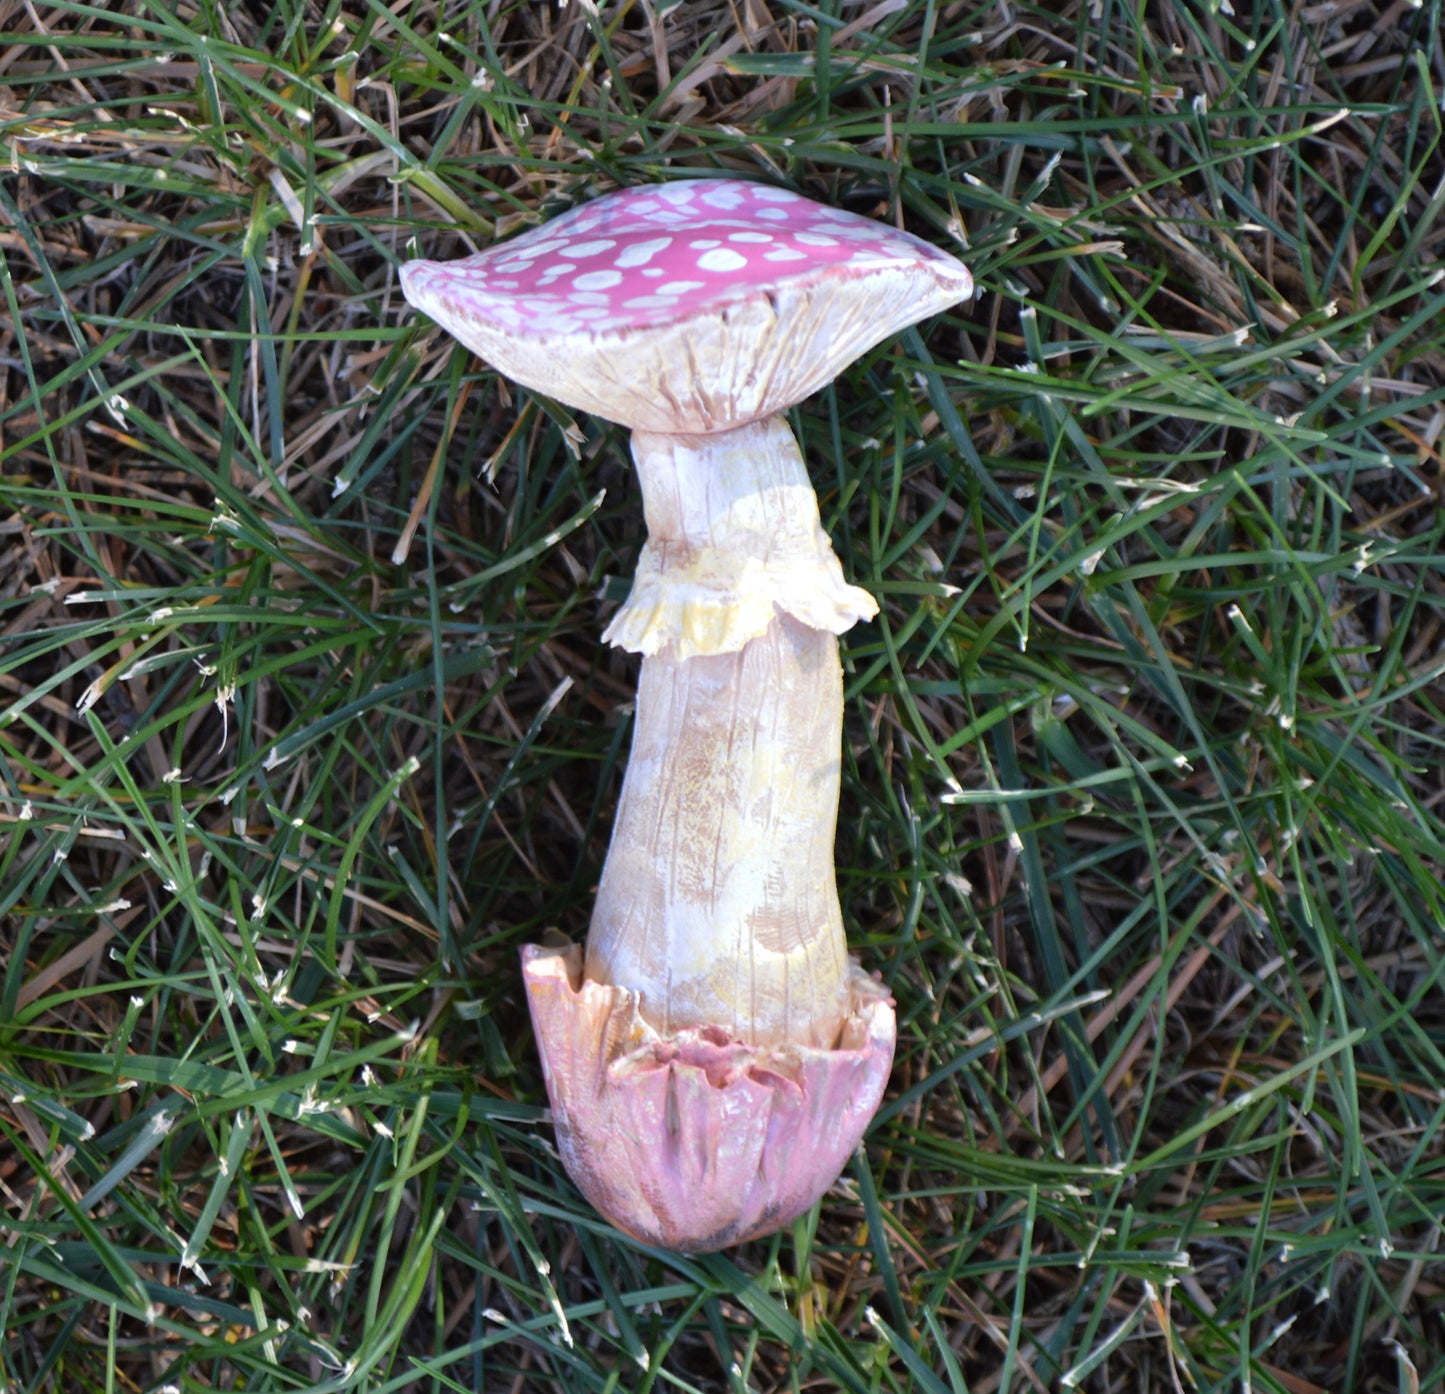 Realistic pink cap mushroom "Amanita Muscaria" decor art object